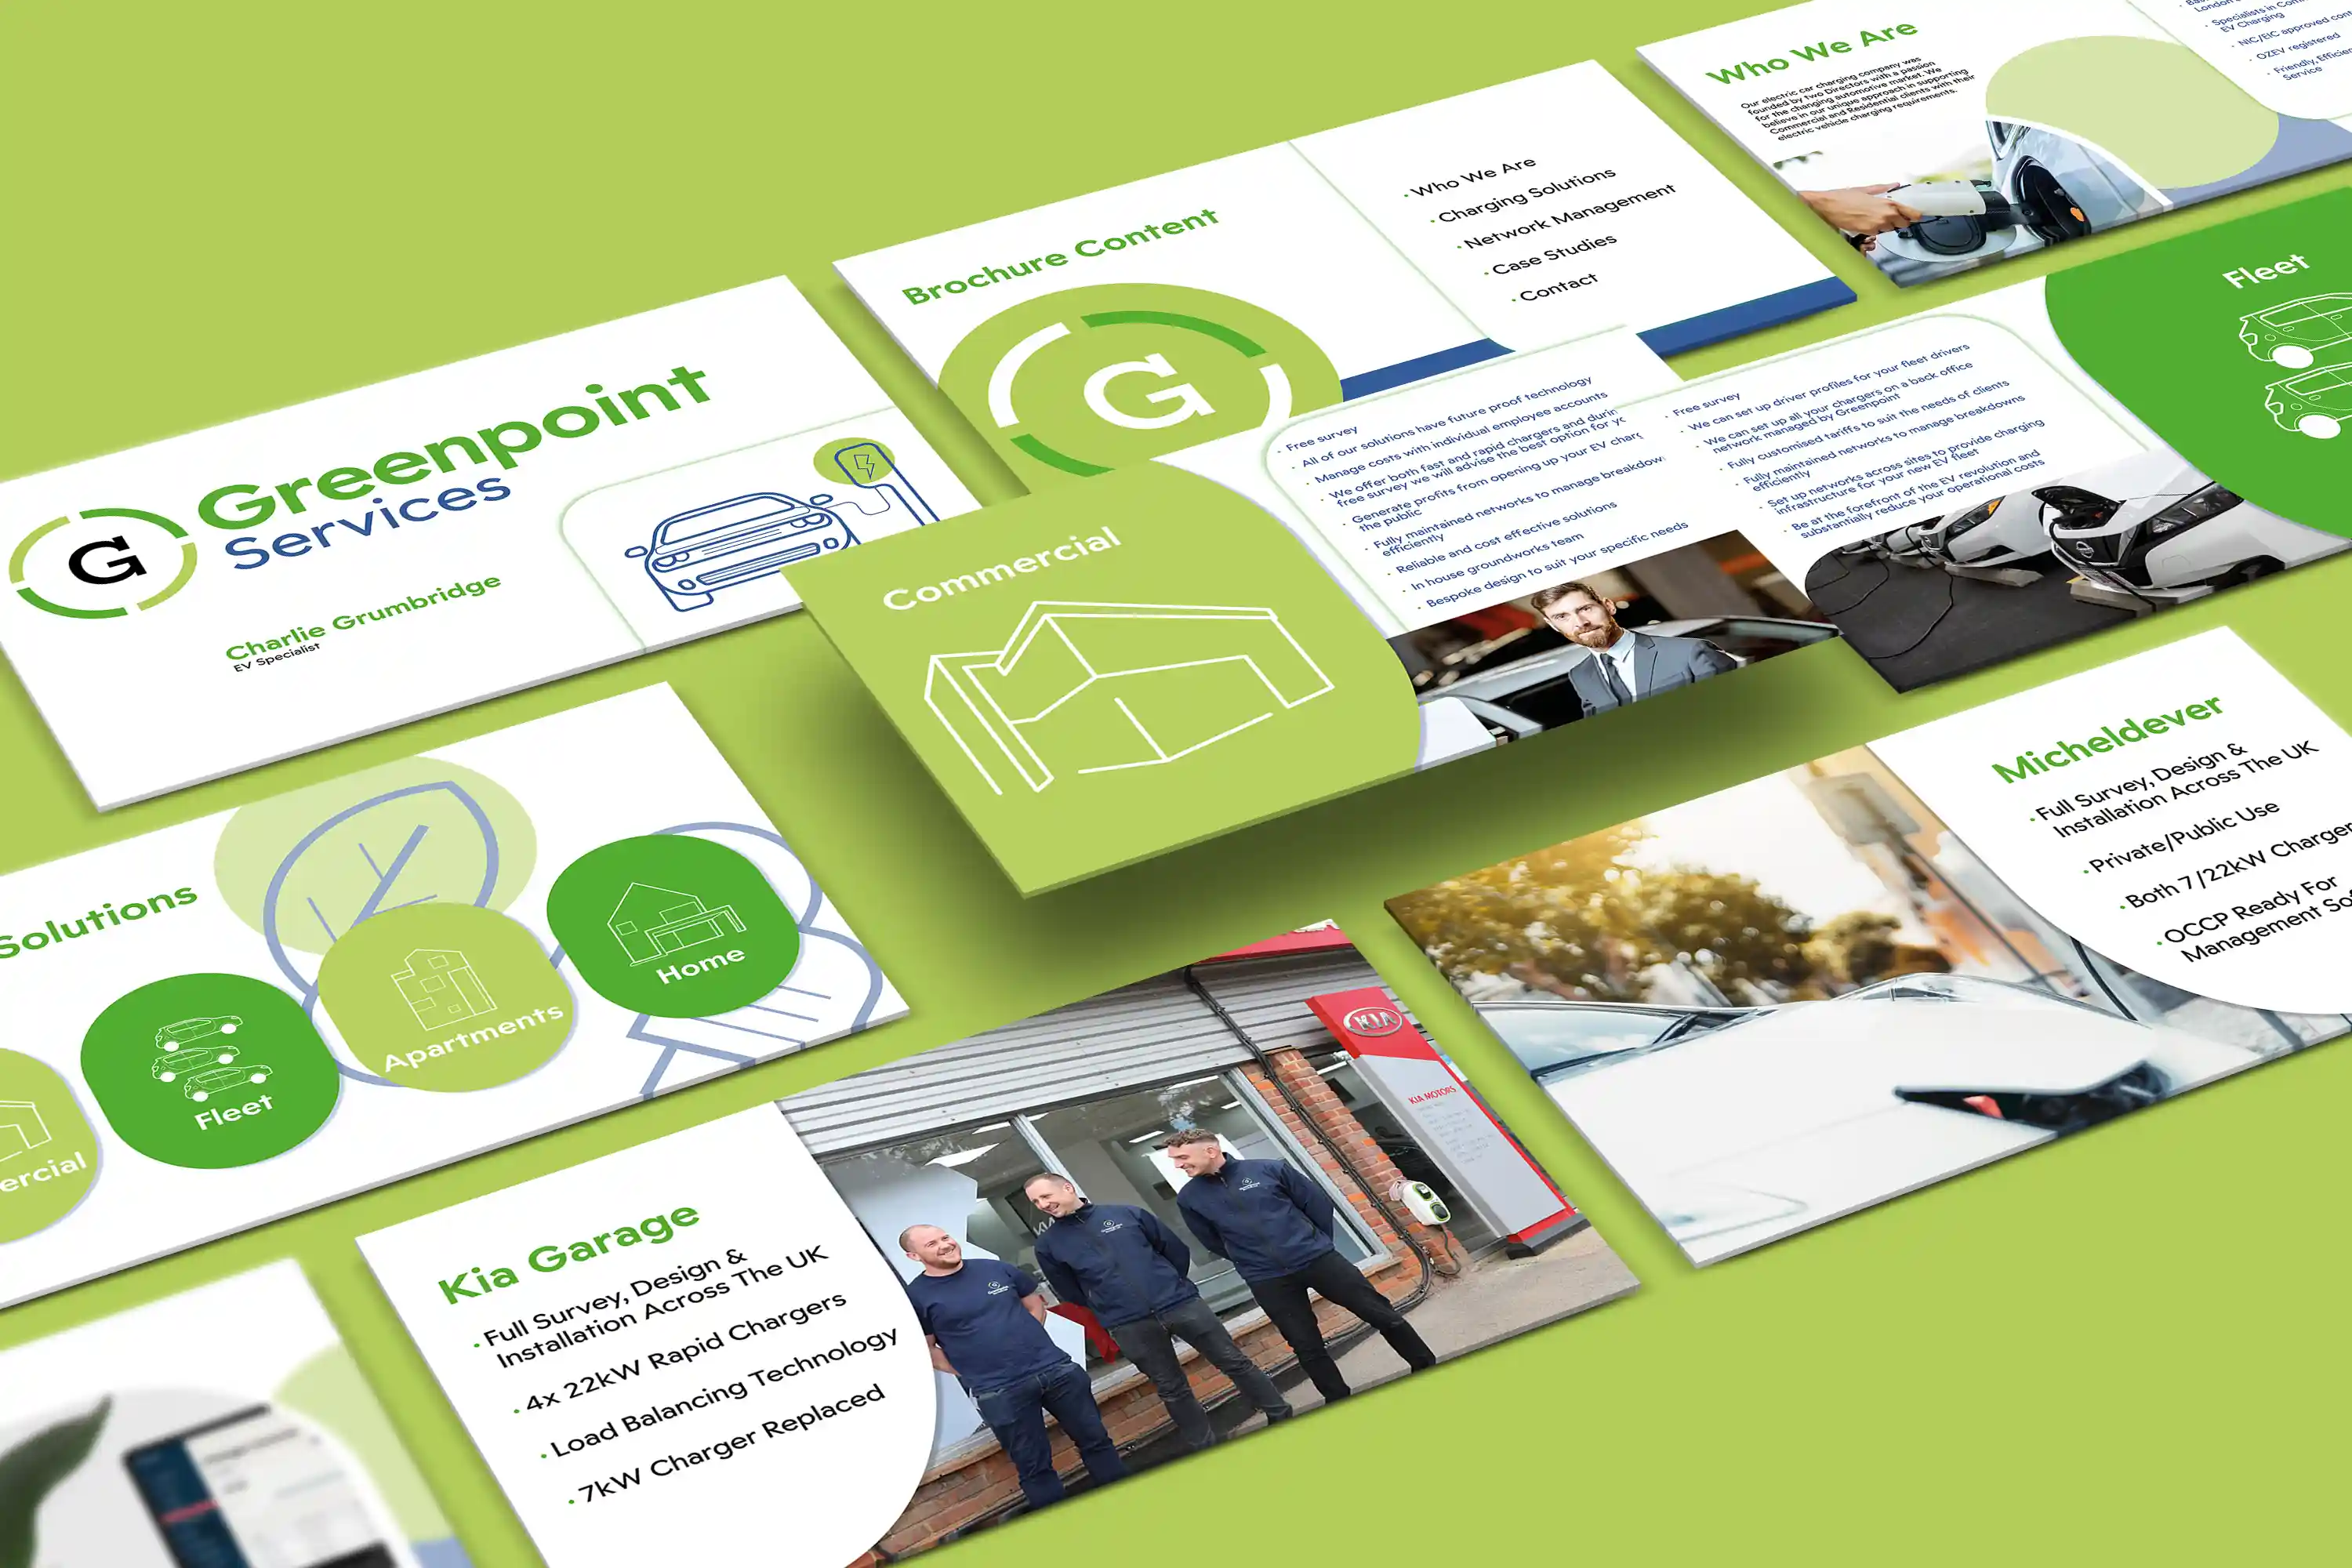 Greenpoint -  brytr uk - sustainable marketing agency London - green, ethical and eco marketing